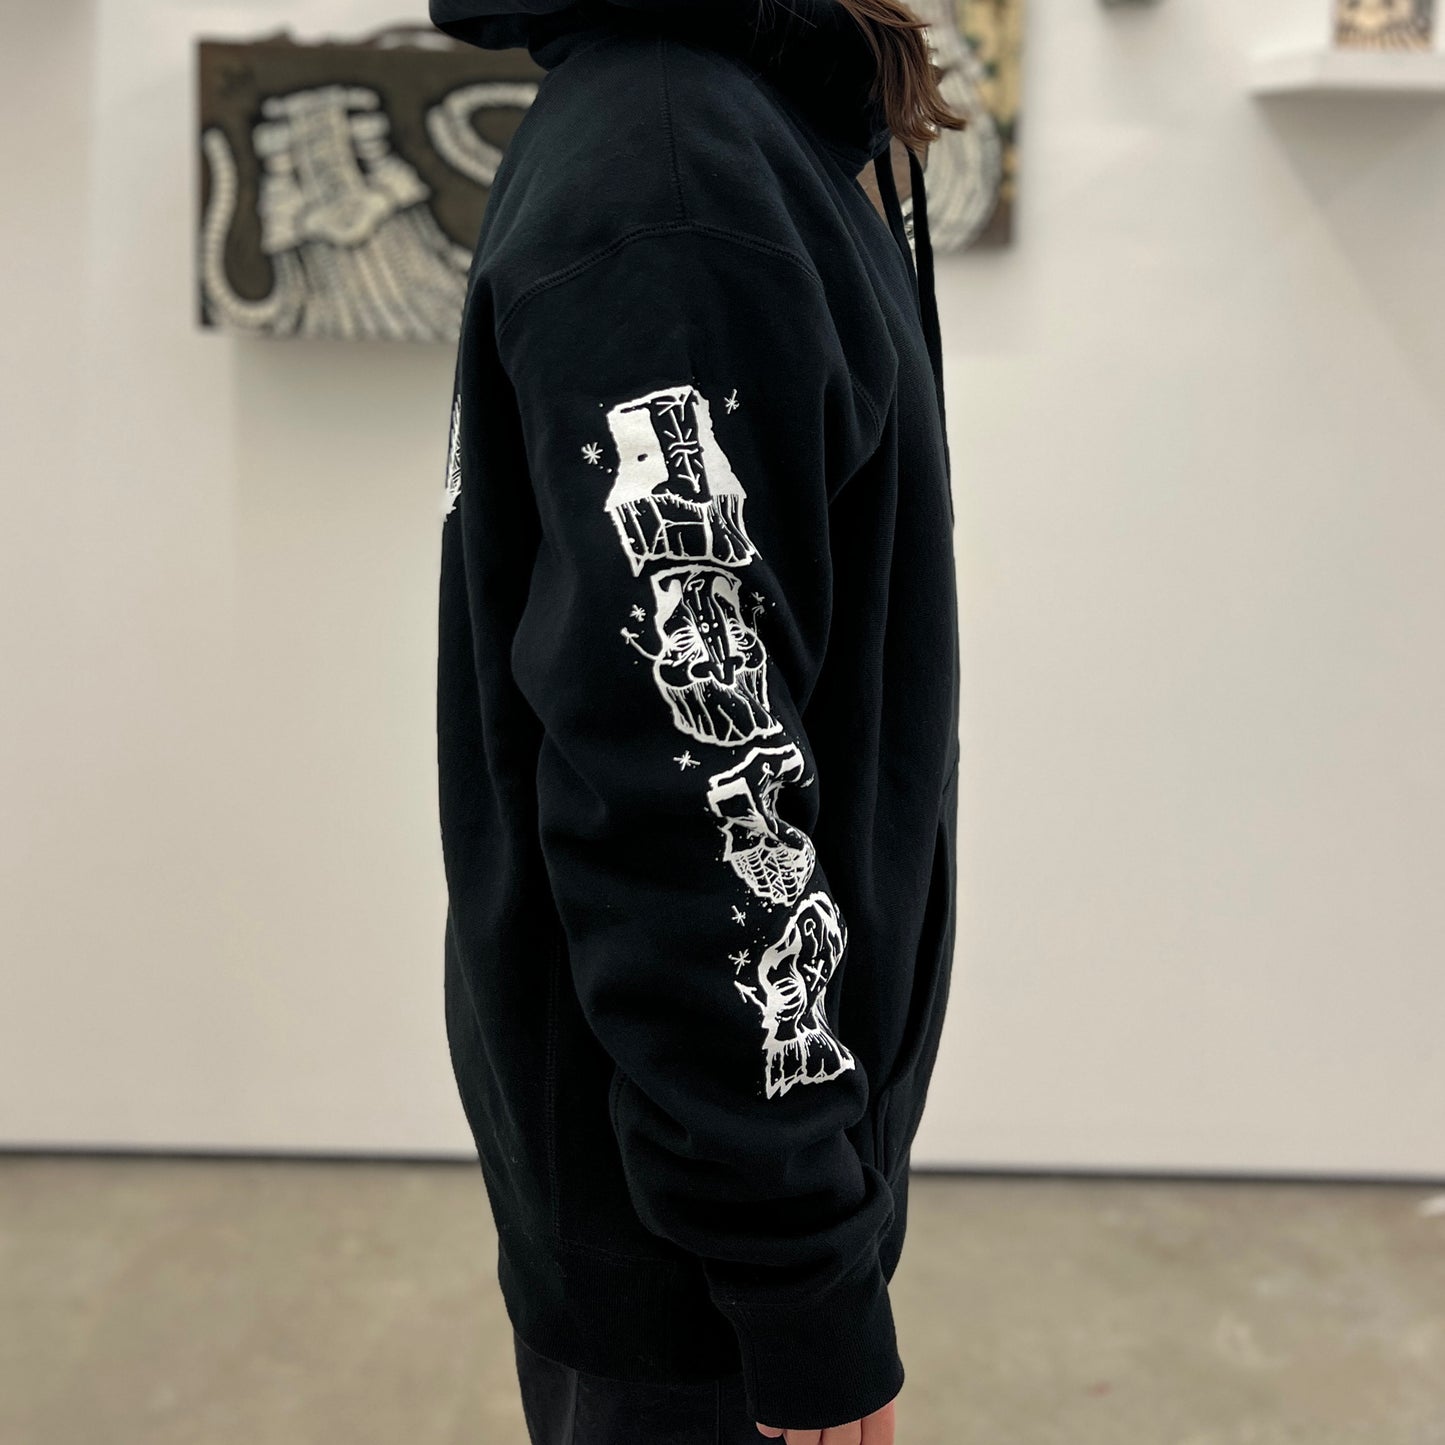  by GATS titled GATS - "Arachnophile" Hooded Sweatshirt in Black